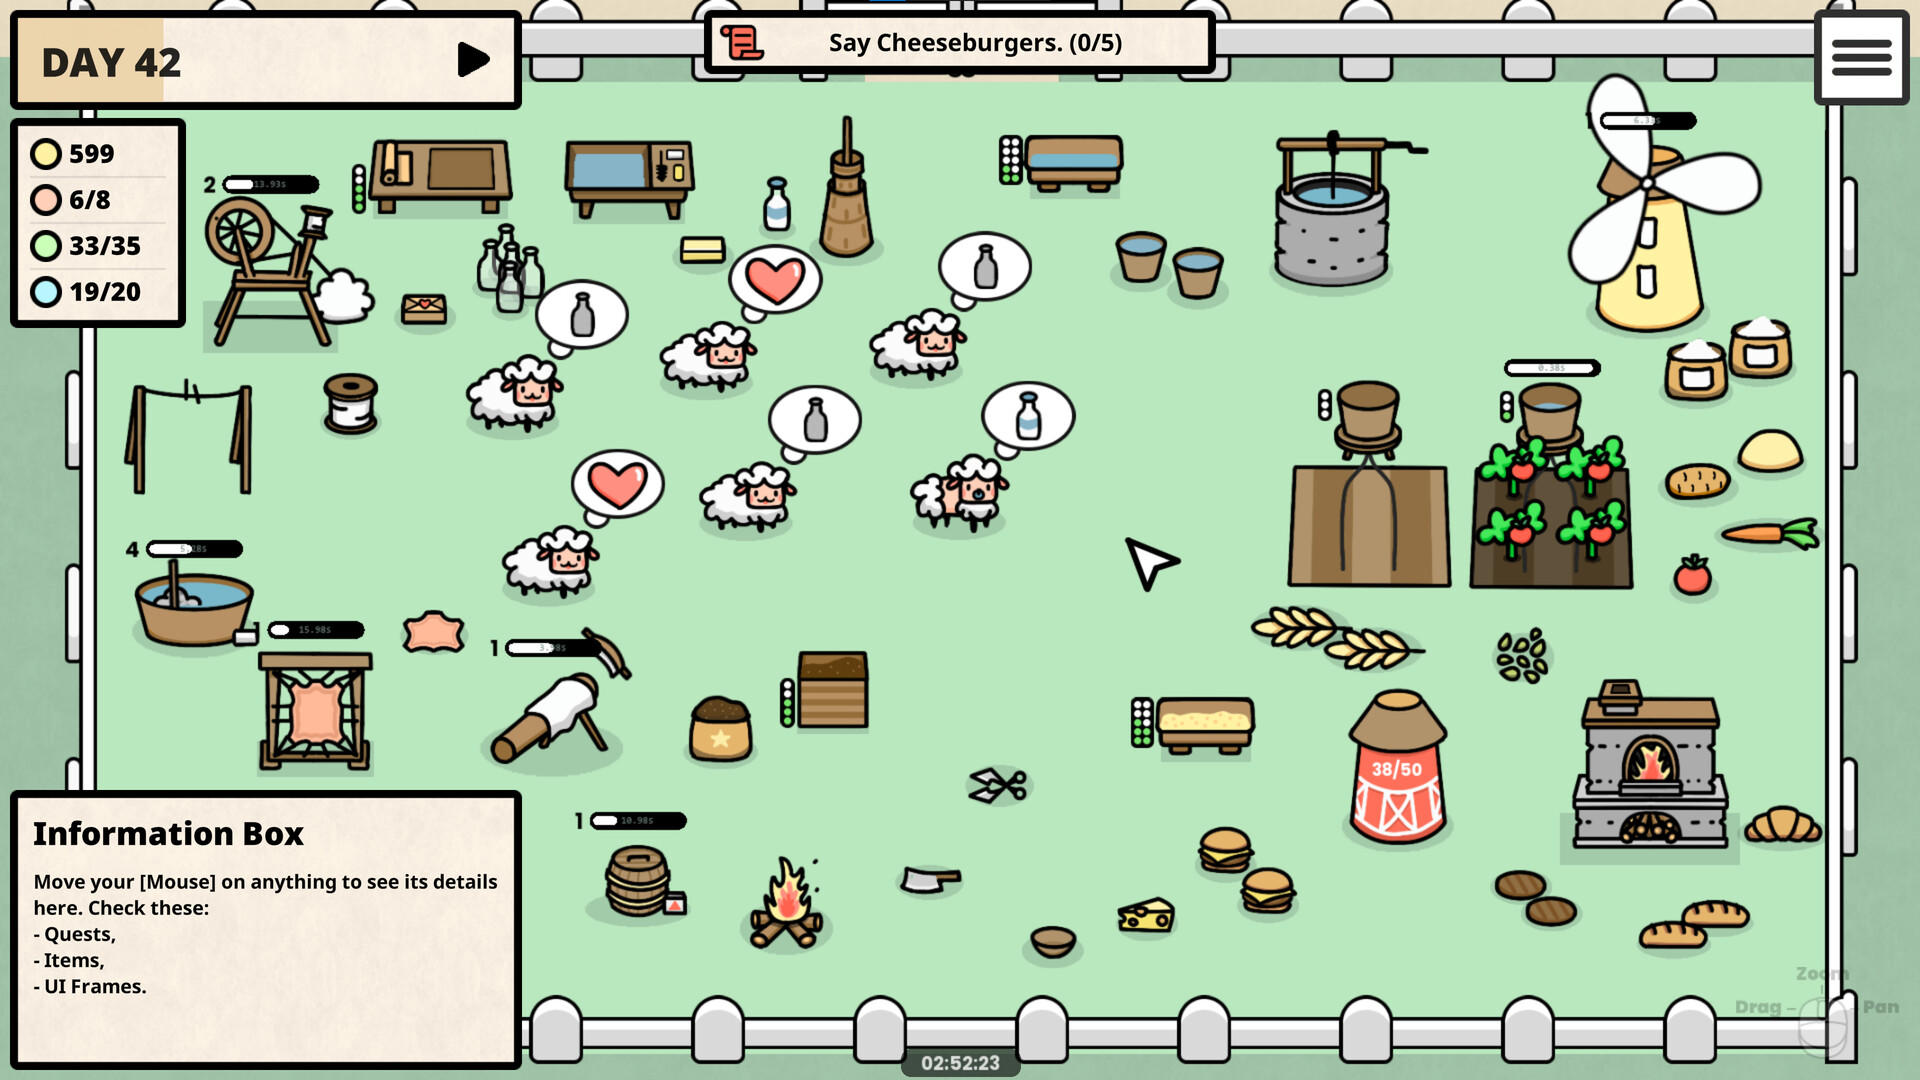 Happy Sheepies screenshot game